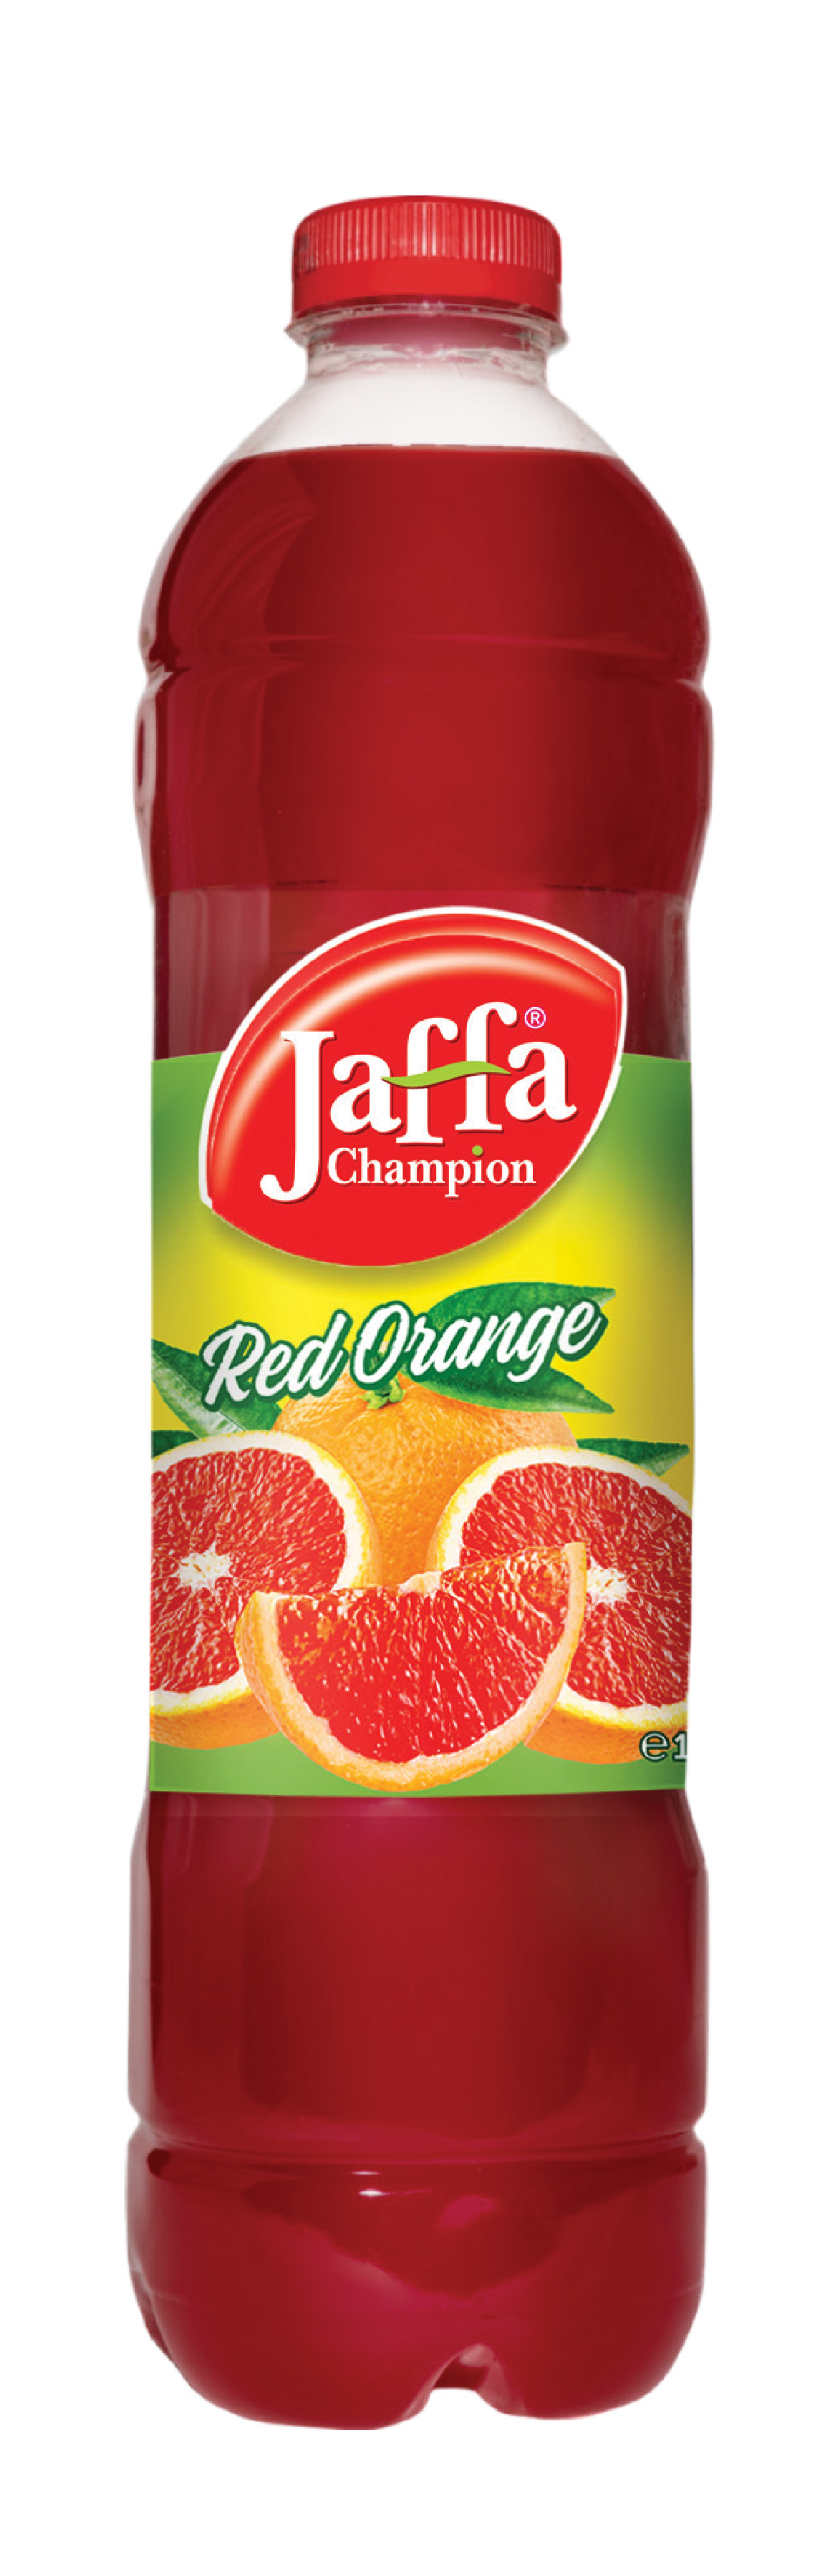 Jaffa Champion rote Orange 1,5 liter